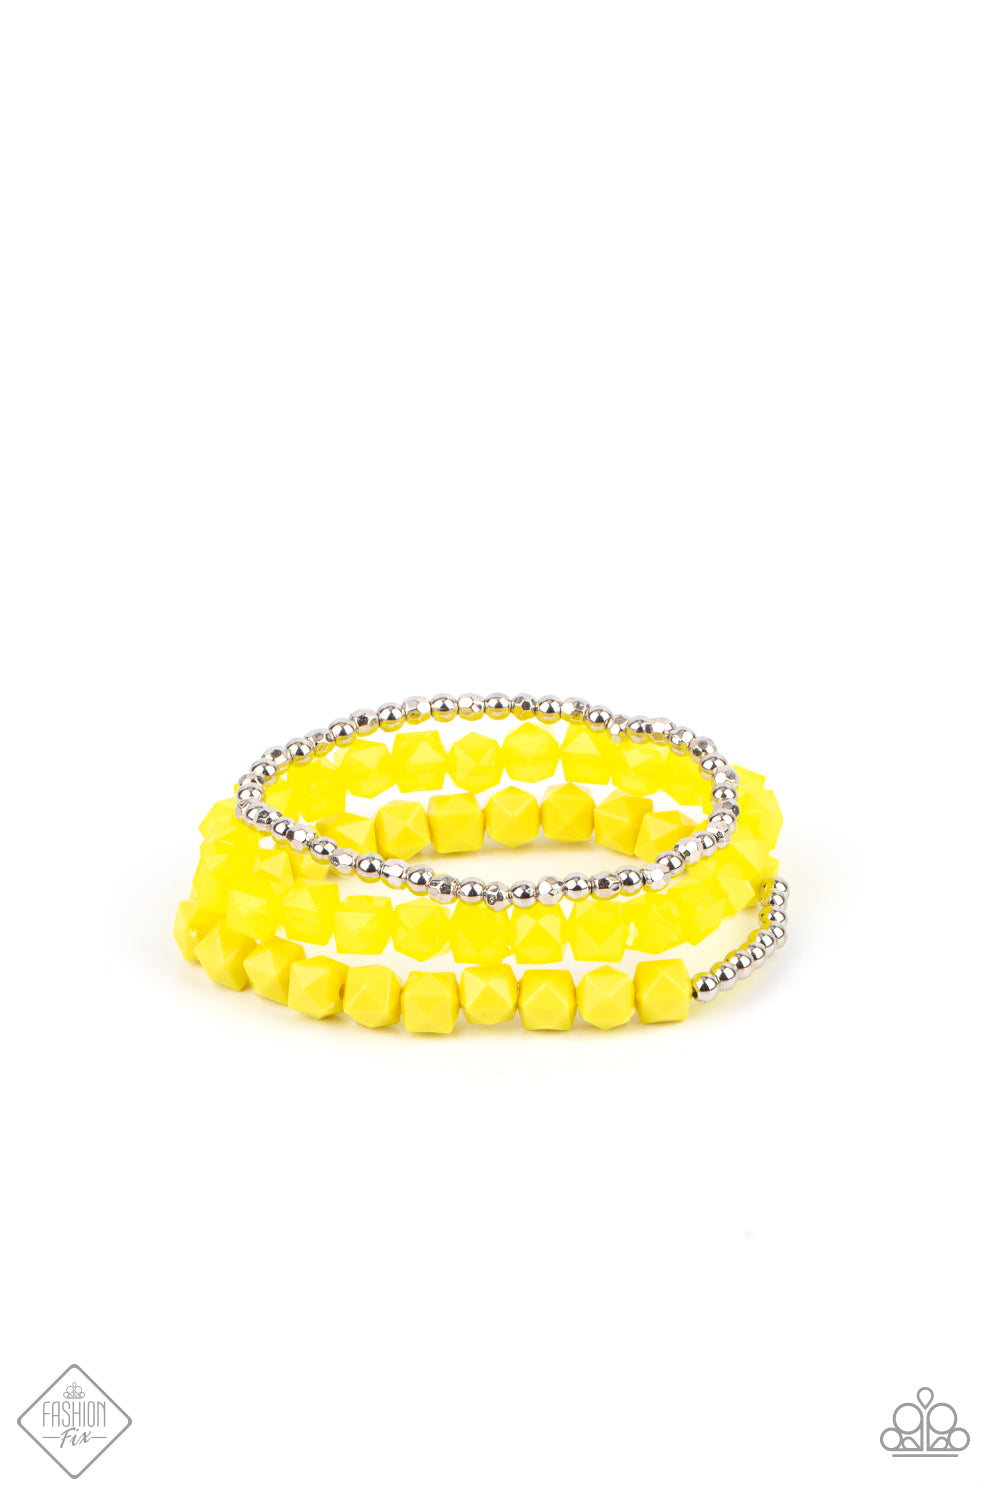 Vacay Vagabond - Yellow Bracelet (GM-0721) freeshipping - JewLz4u Gemstone Gallery